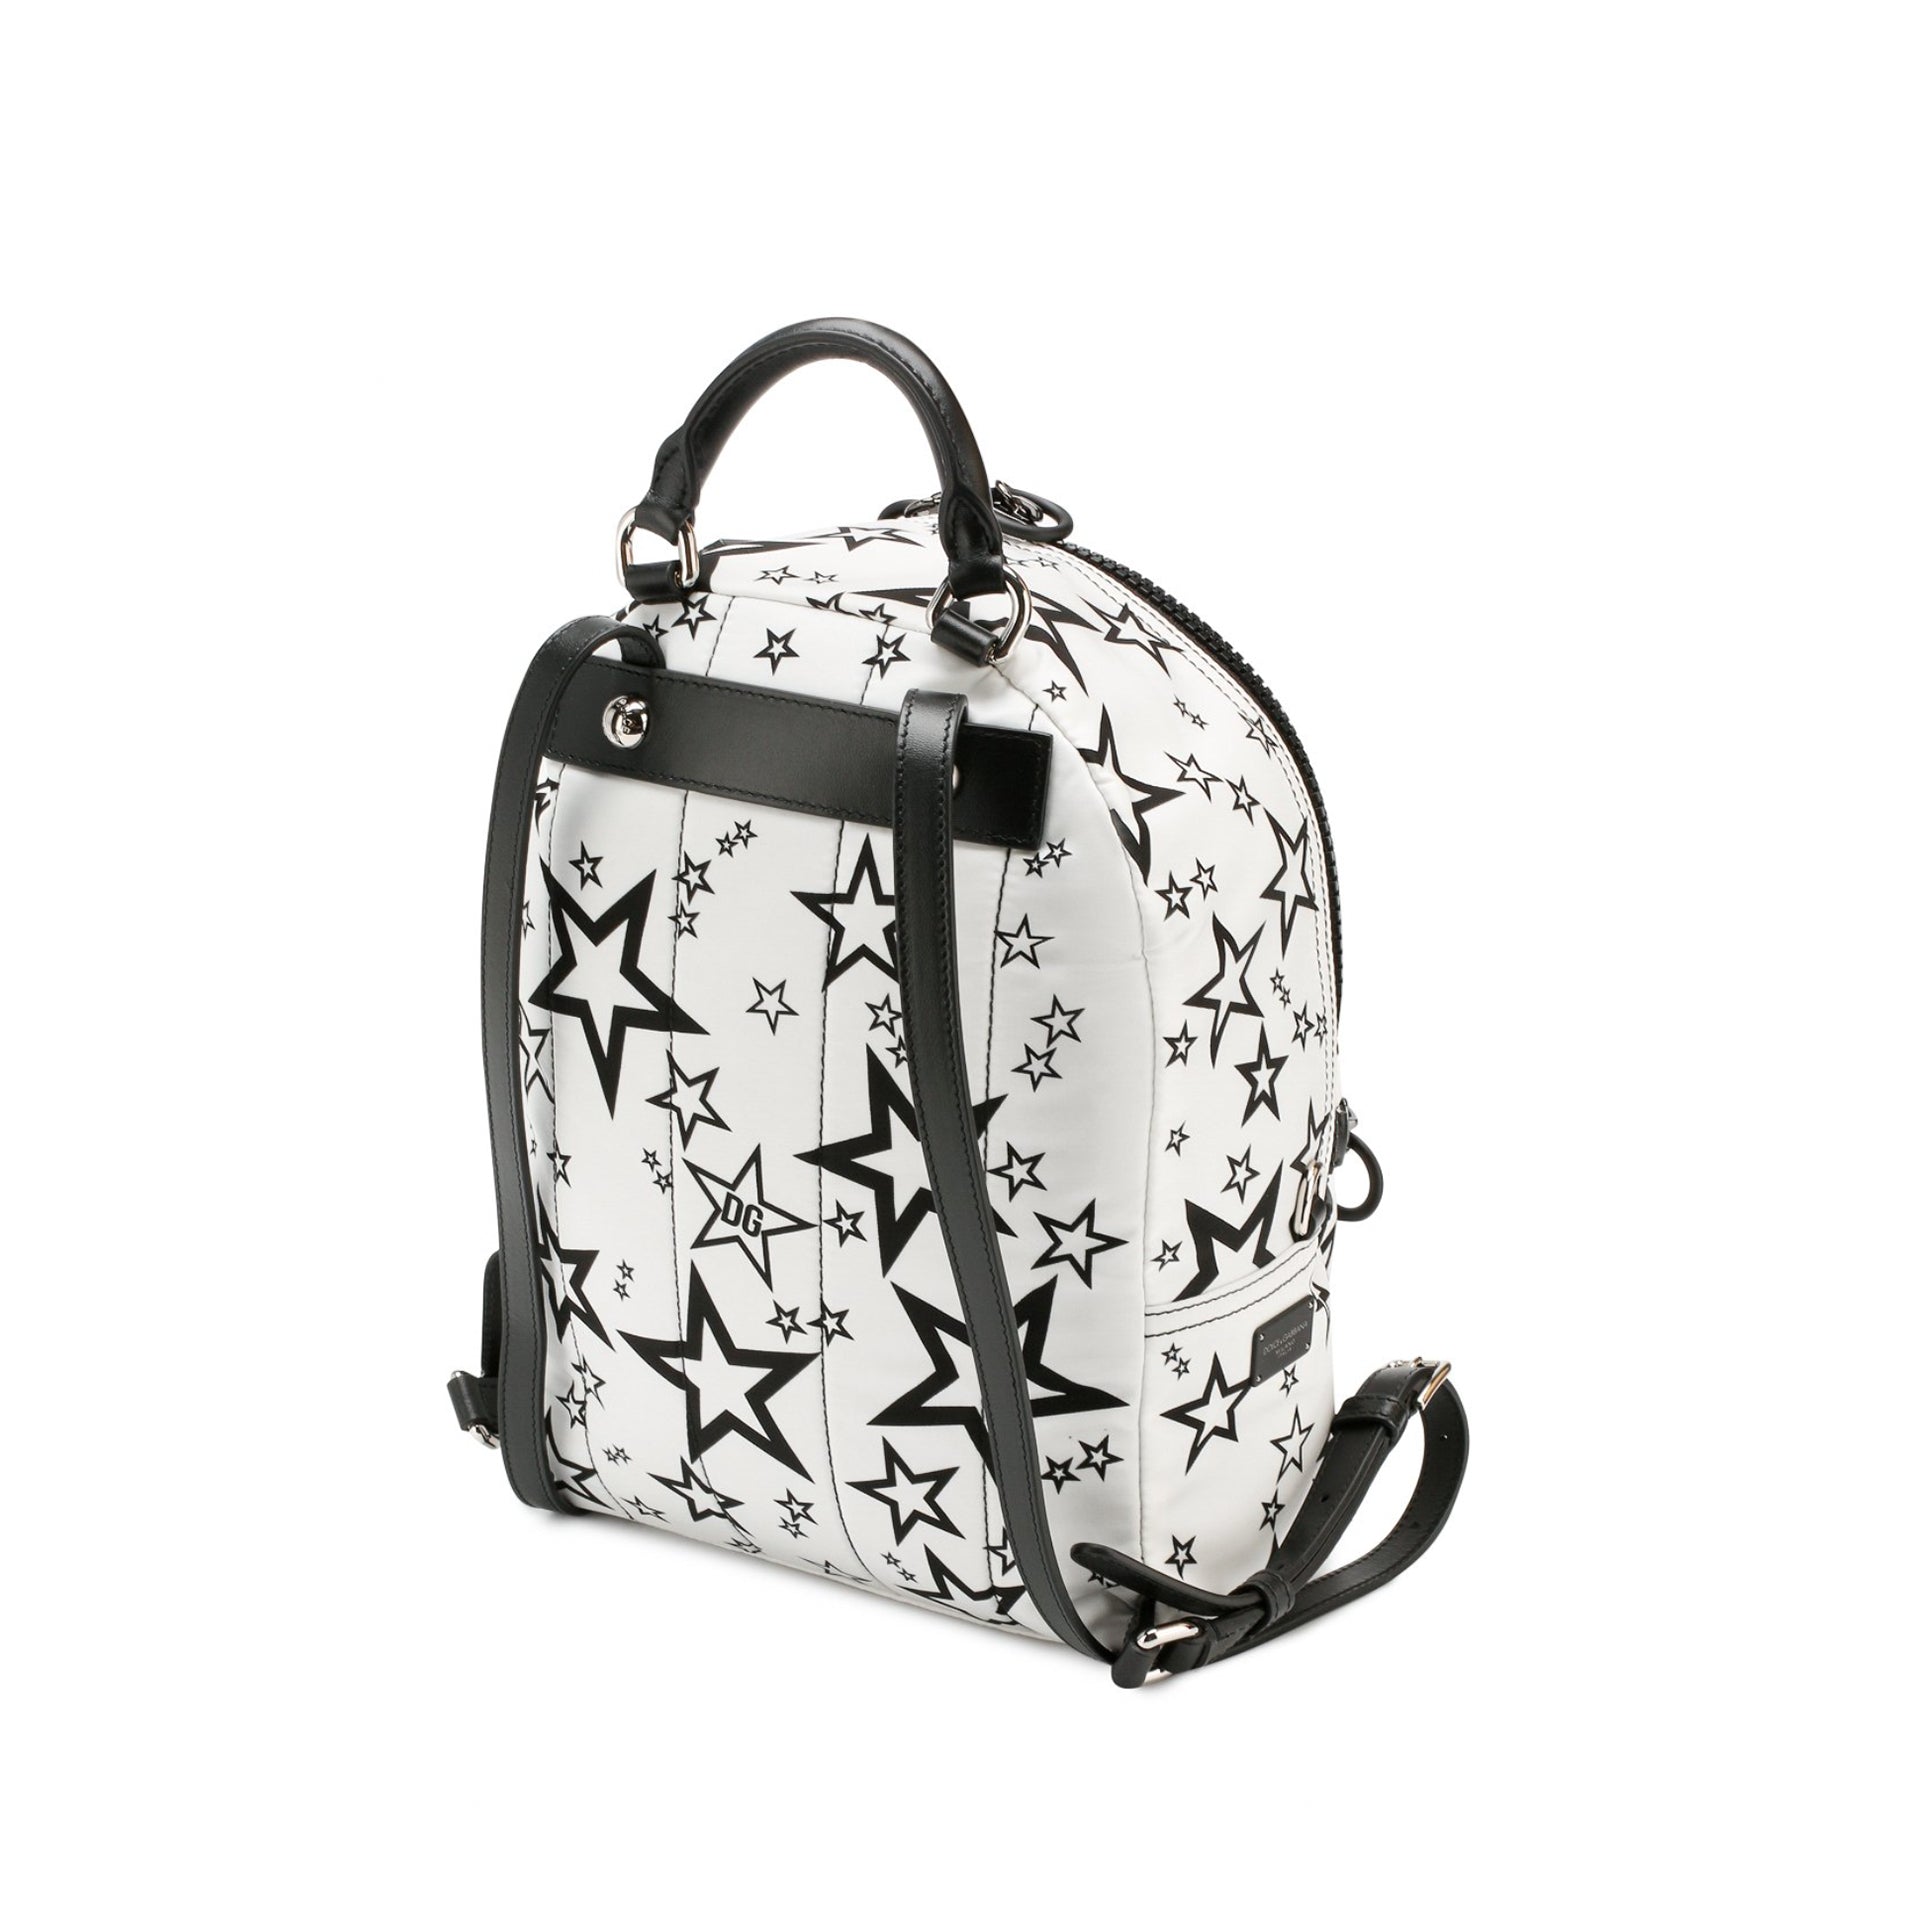 DOLCE-GABBANA-OUTLET-SALE-Dolce-Gabbana-Stars-Print-Backpack-Taschen-WHITE-UNI-ARCHIVE-COLLECTION-2.jpg